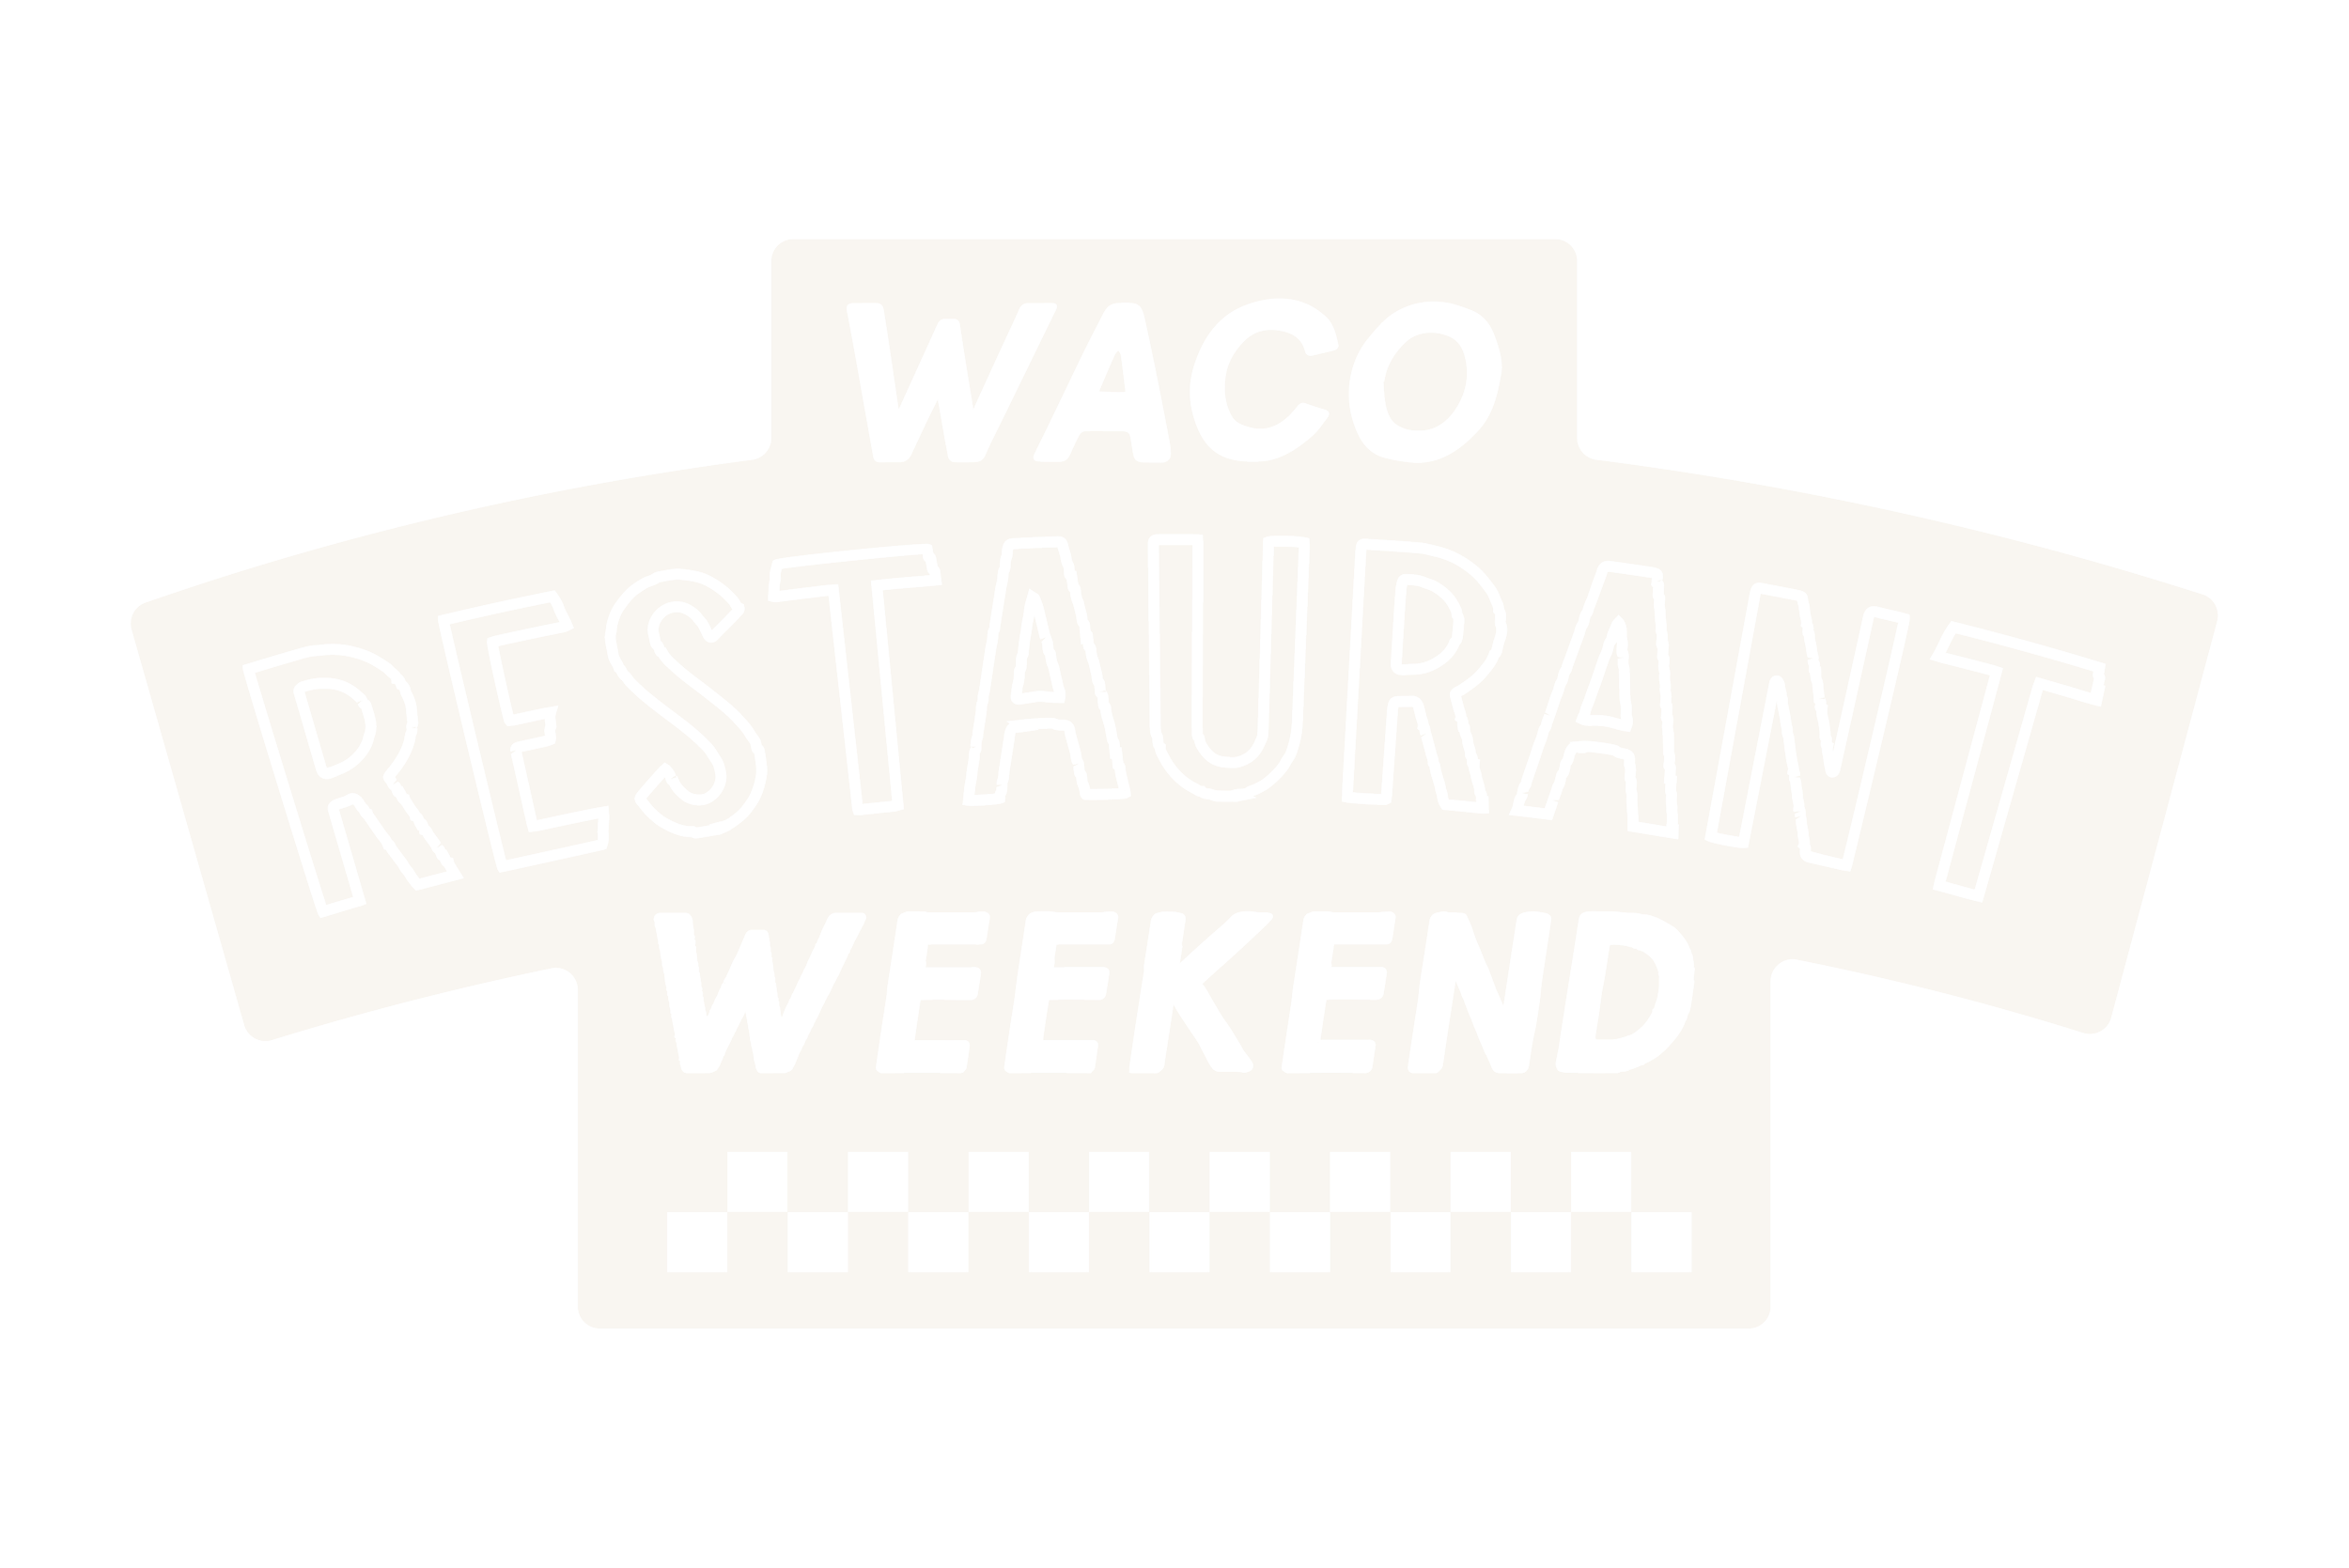 WACO RESTAURANT WEEKEND